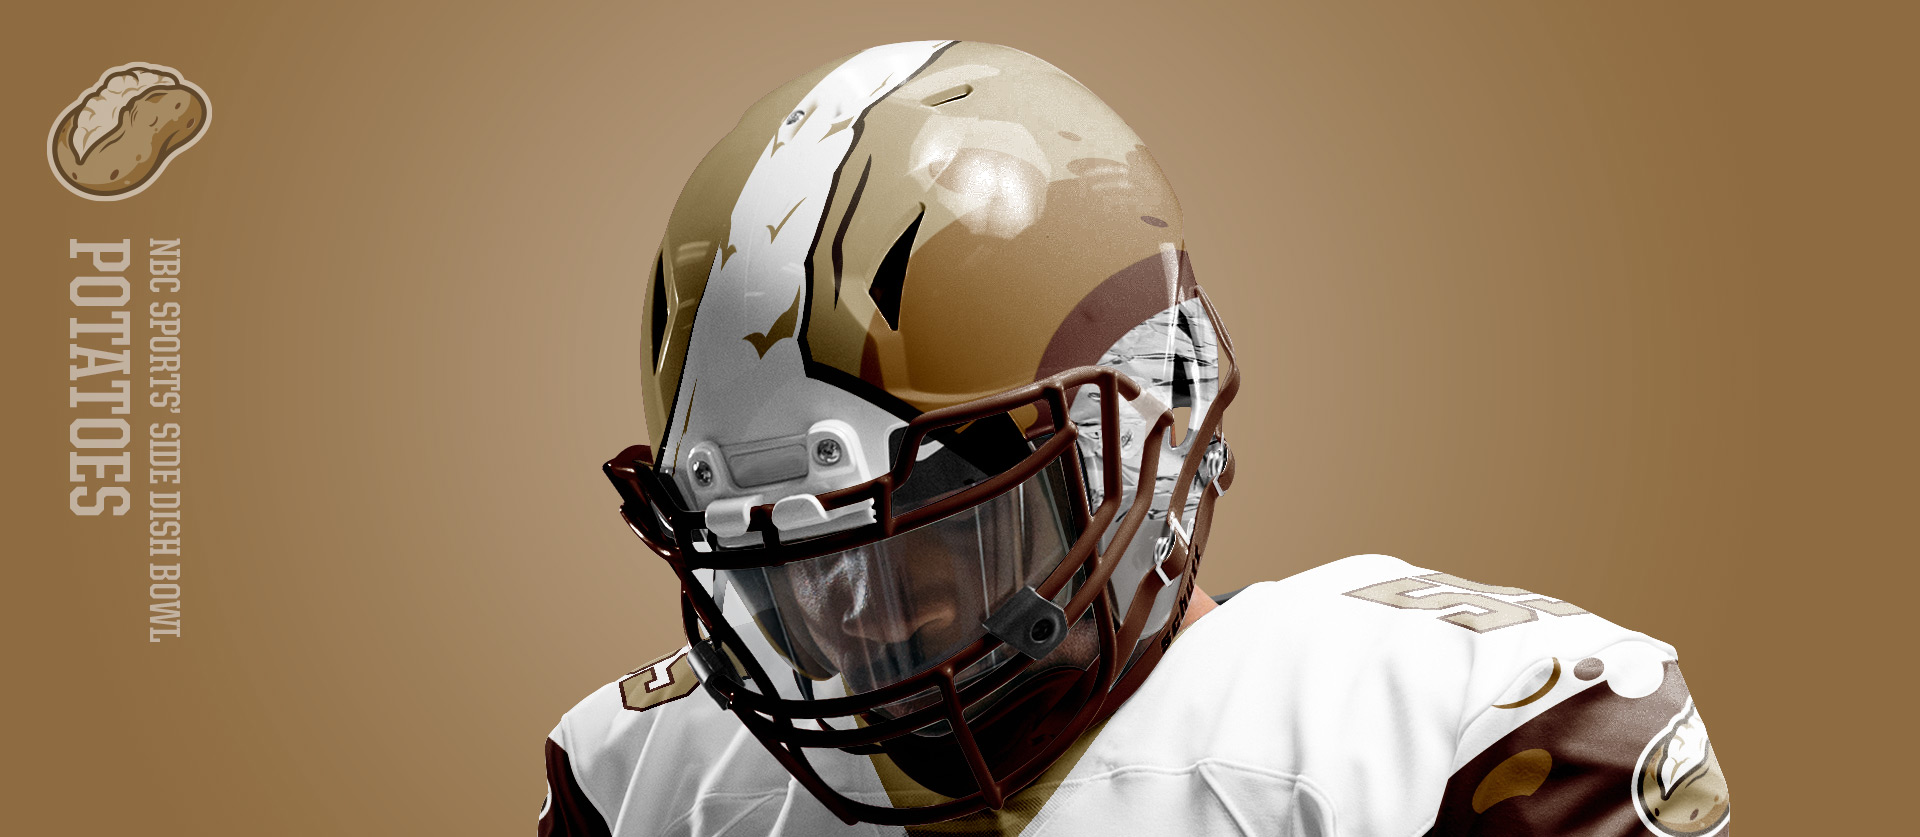 Potatoes Helmet Frontside - Football Uniform Design for NBC Sports Thanksgiving Side Dish Bowl